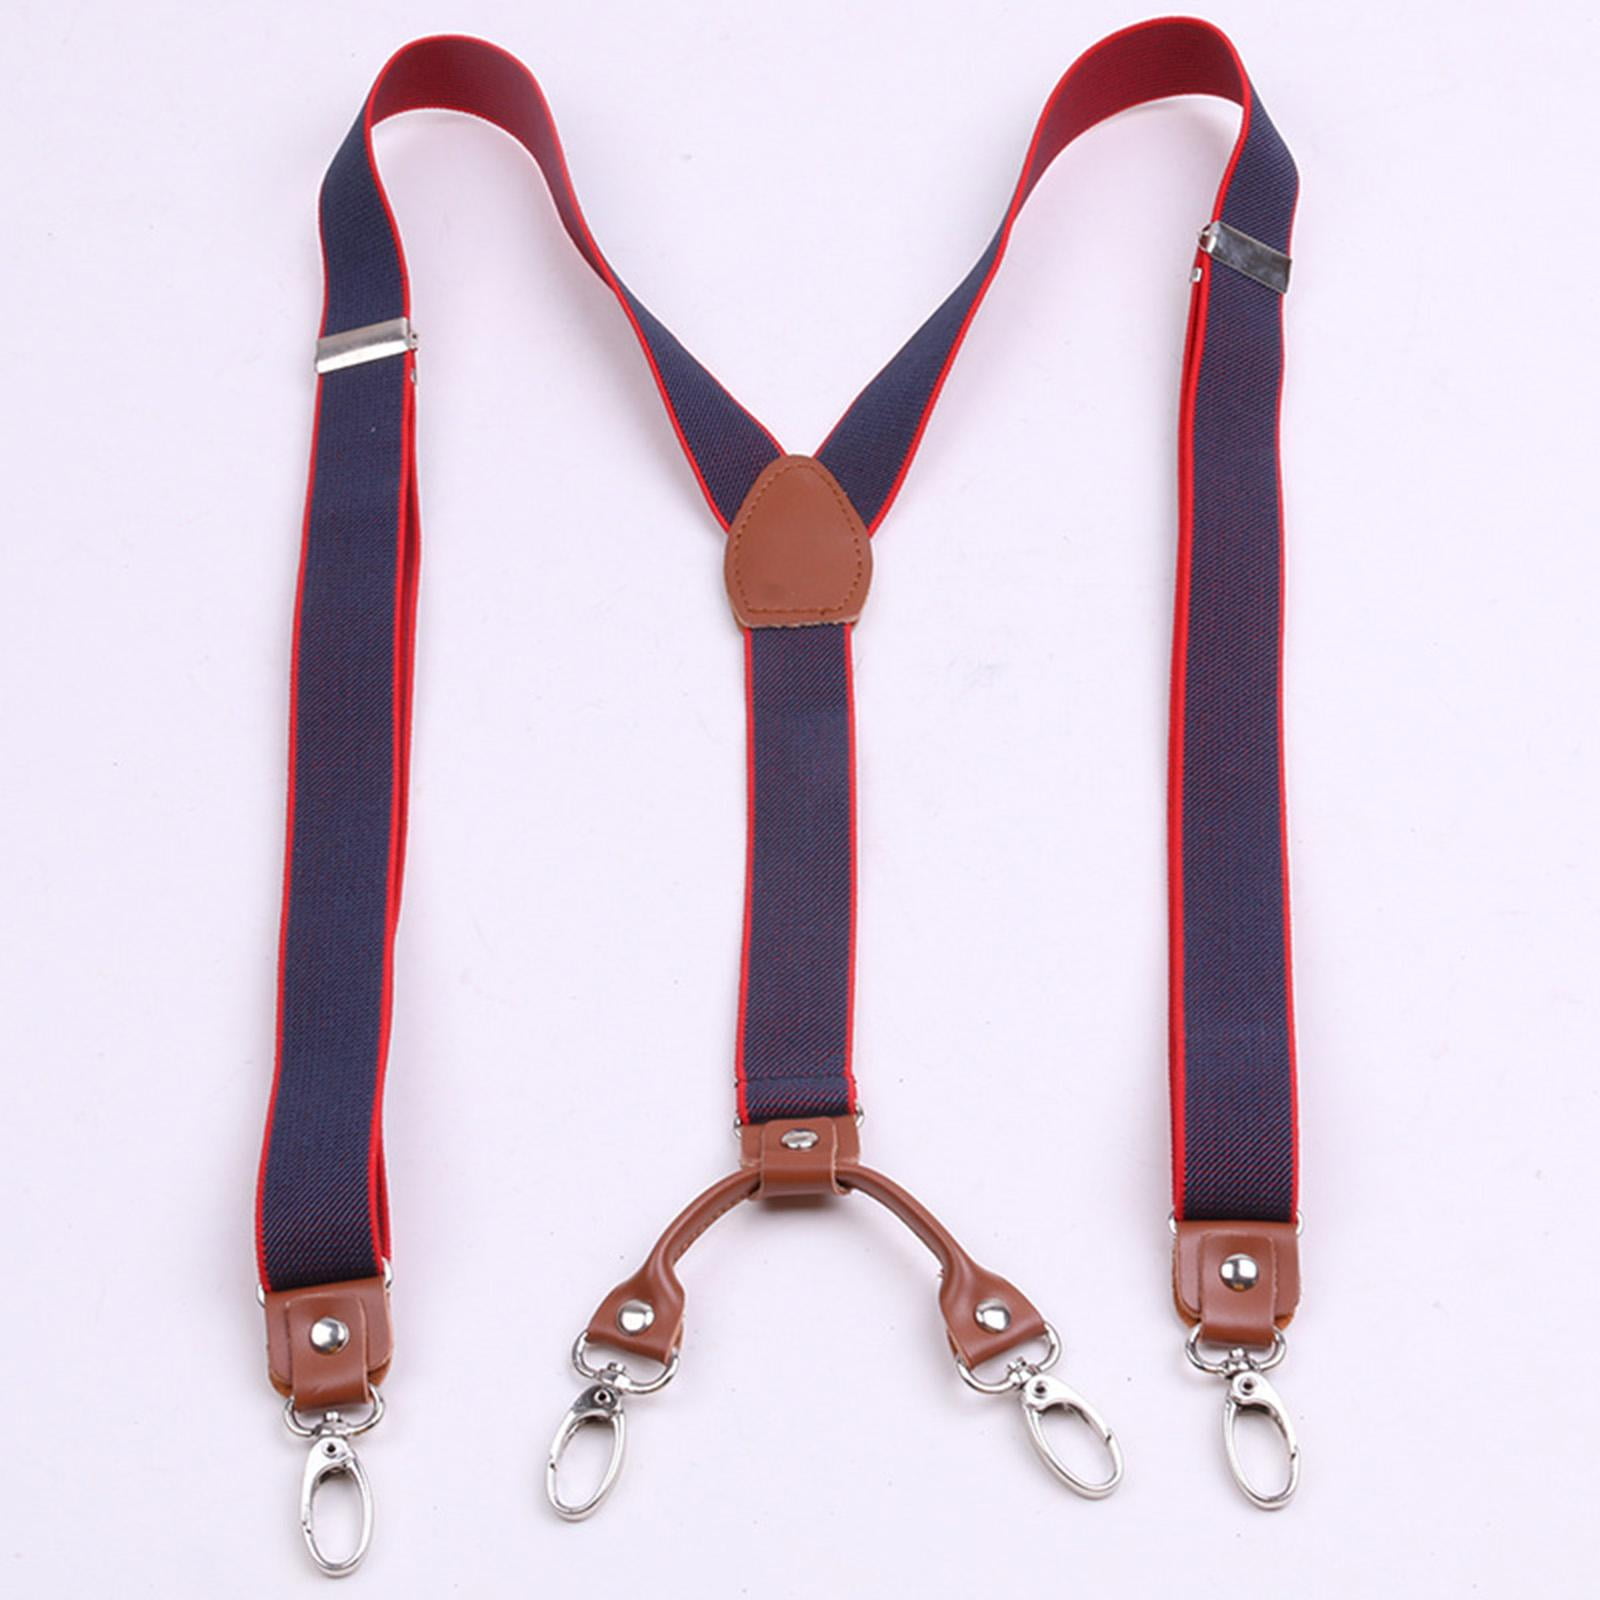 Suspenders for Men, Elastic Adjustable 4 Back Construction 1 Inch